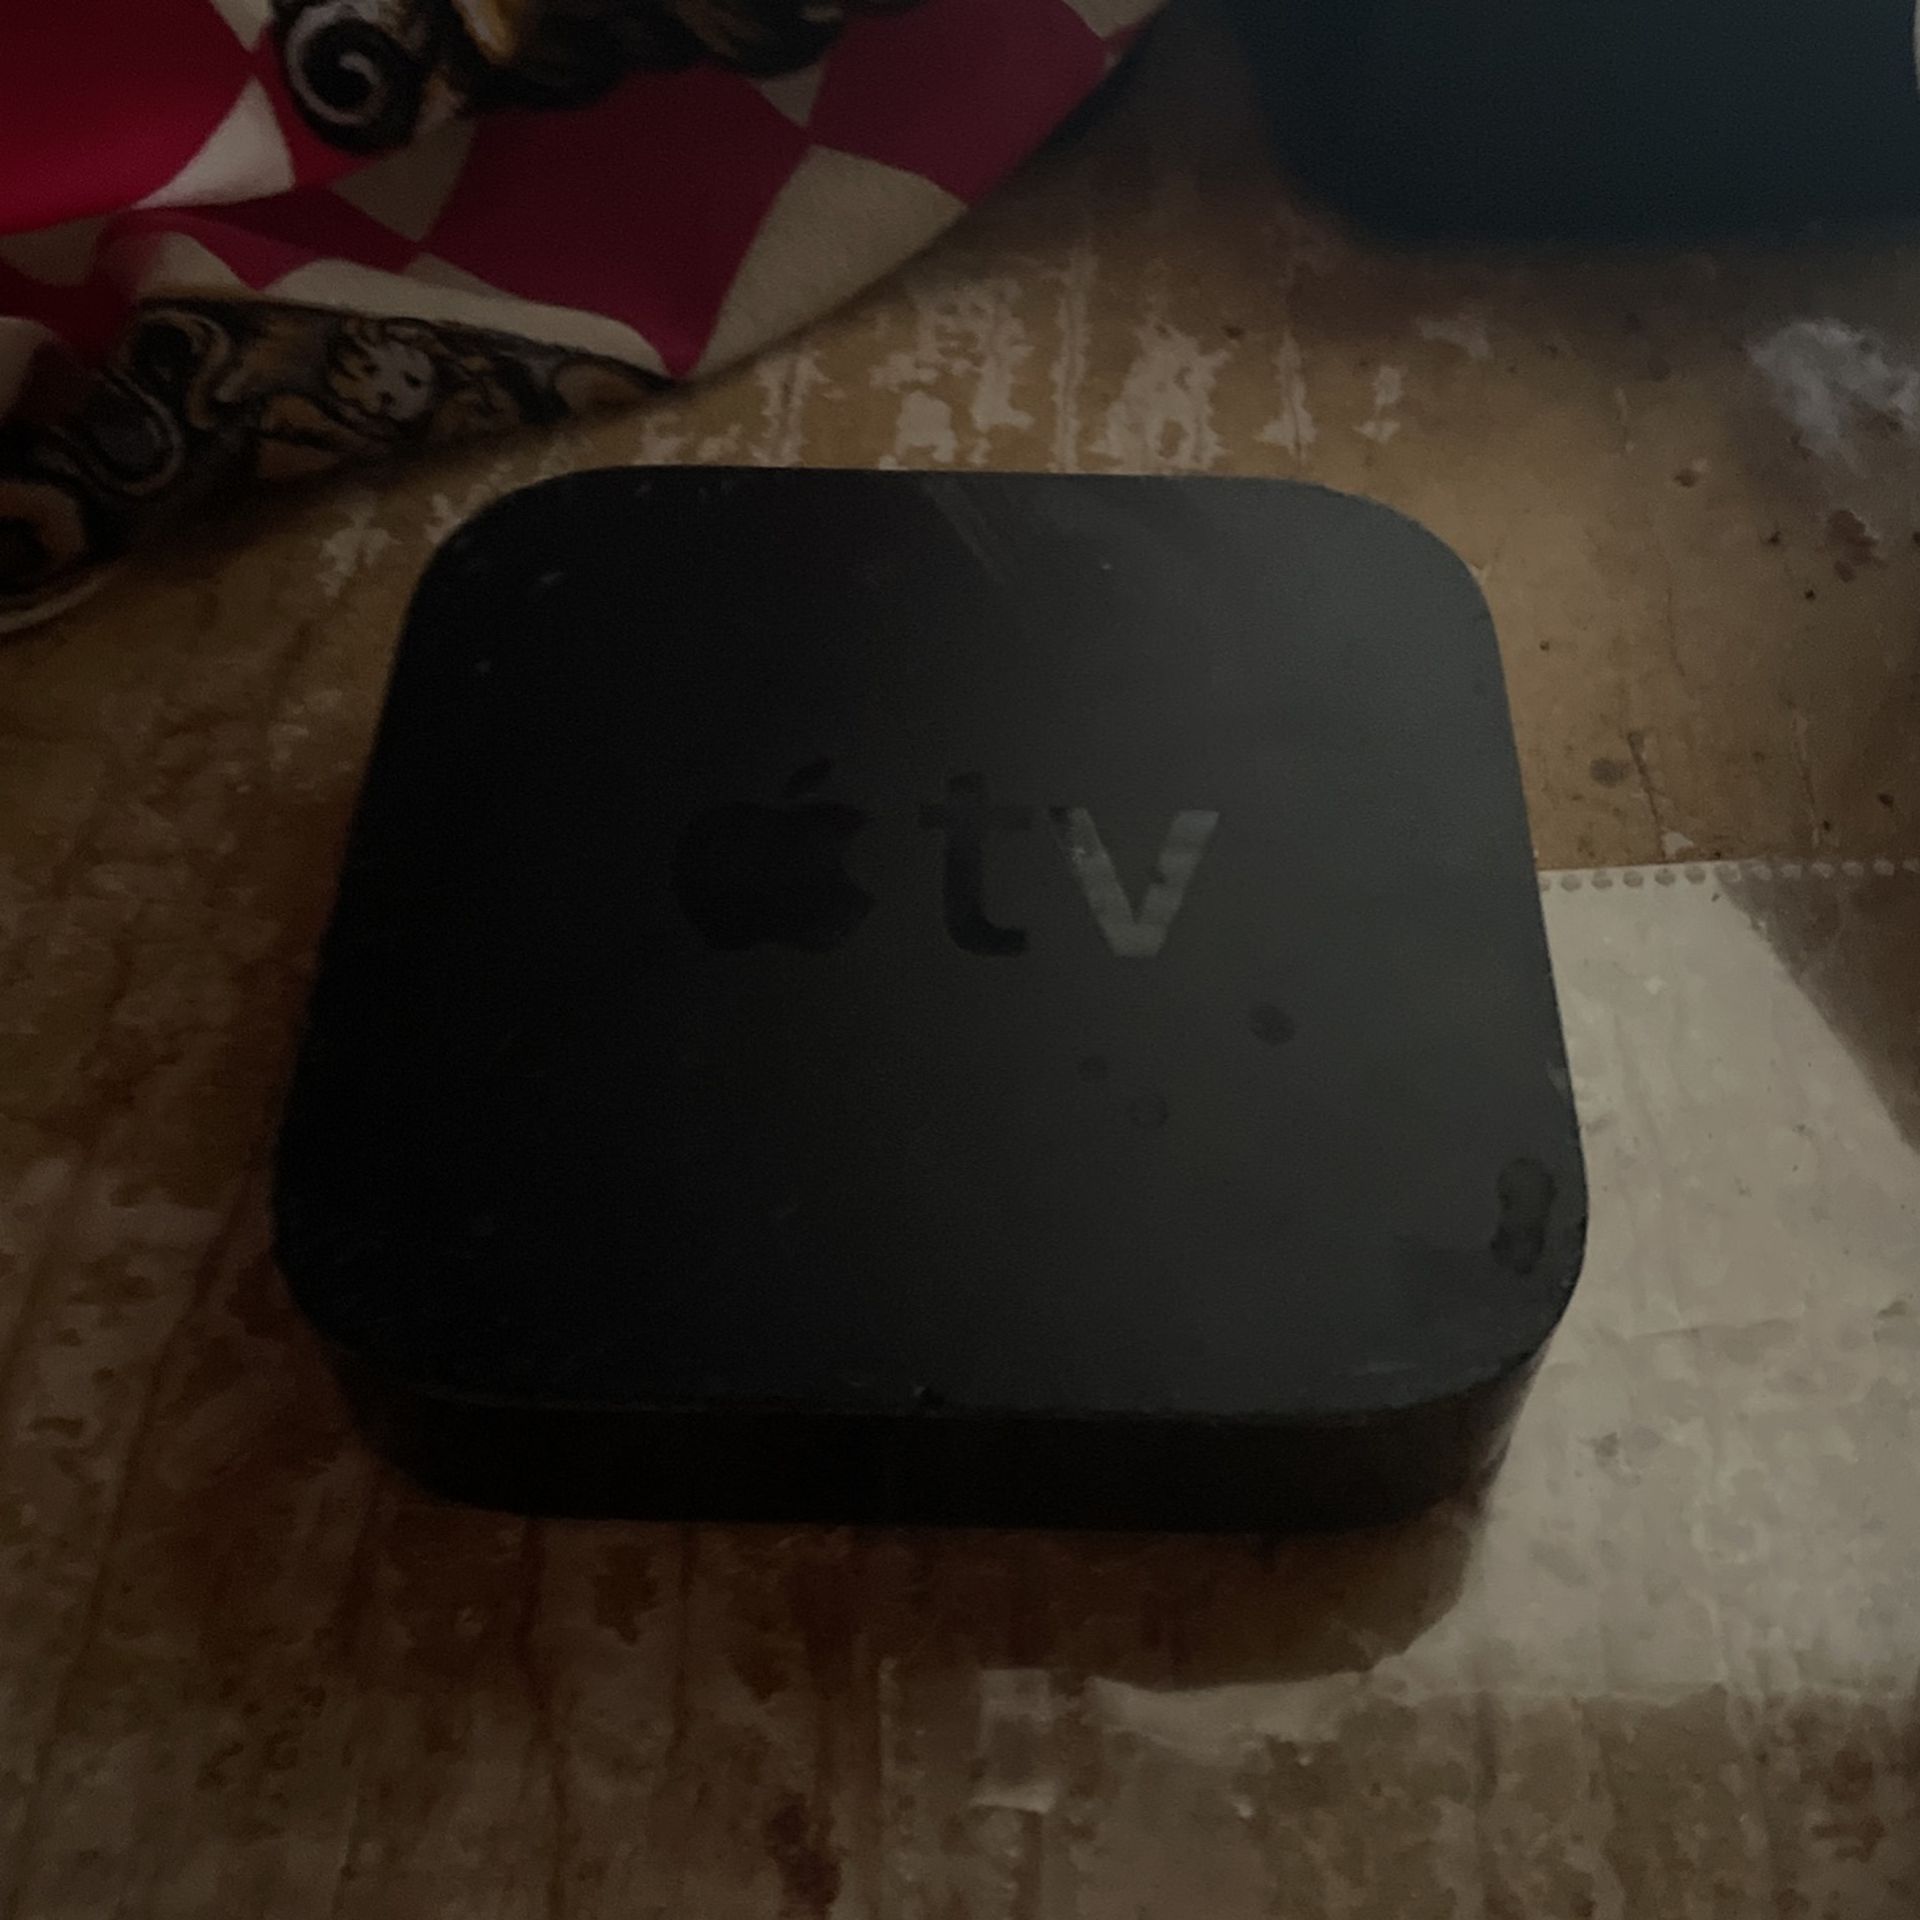 Apple Tv Newer Version